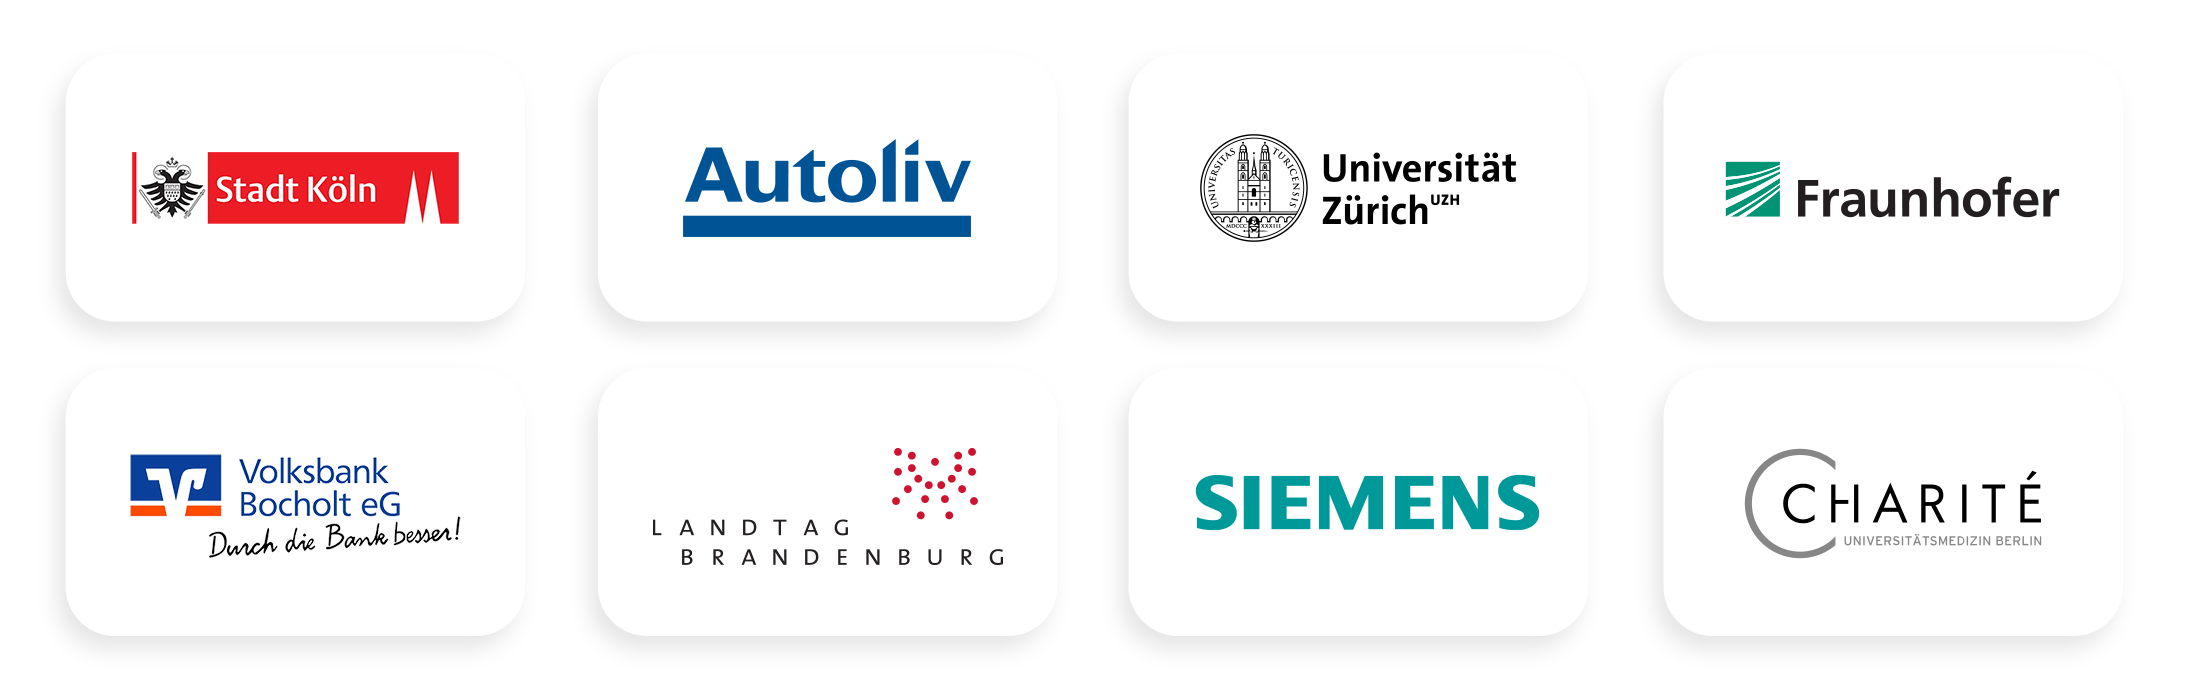 Customers of OpenProject: Stadt Köln, Autoliv, Universität Zürich, Fraunhofer, Volksbank Bocholt, Landtag Brandenburg, Siemens, Charité Berlin